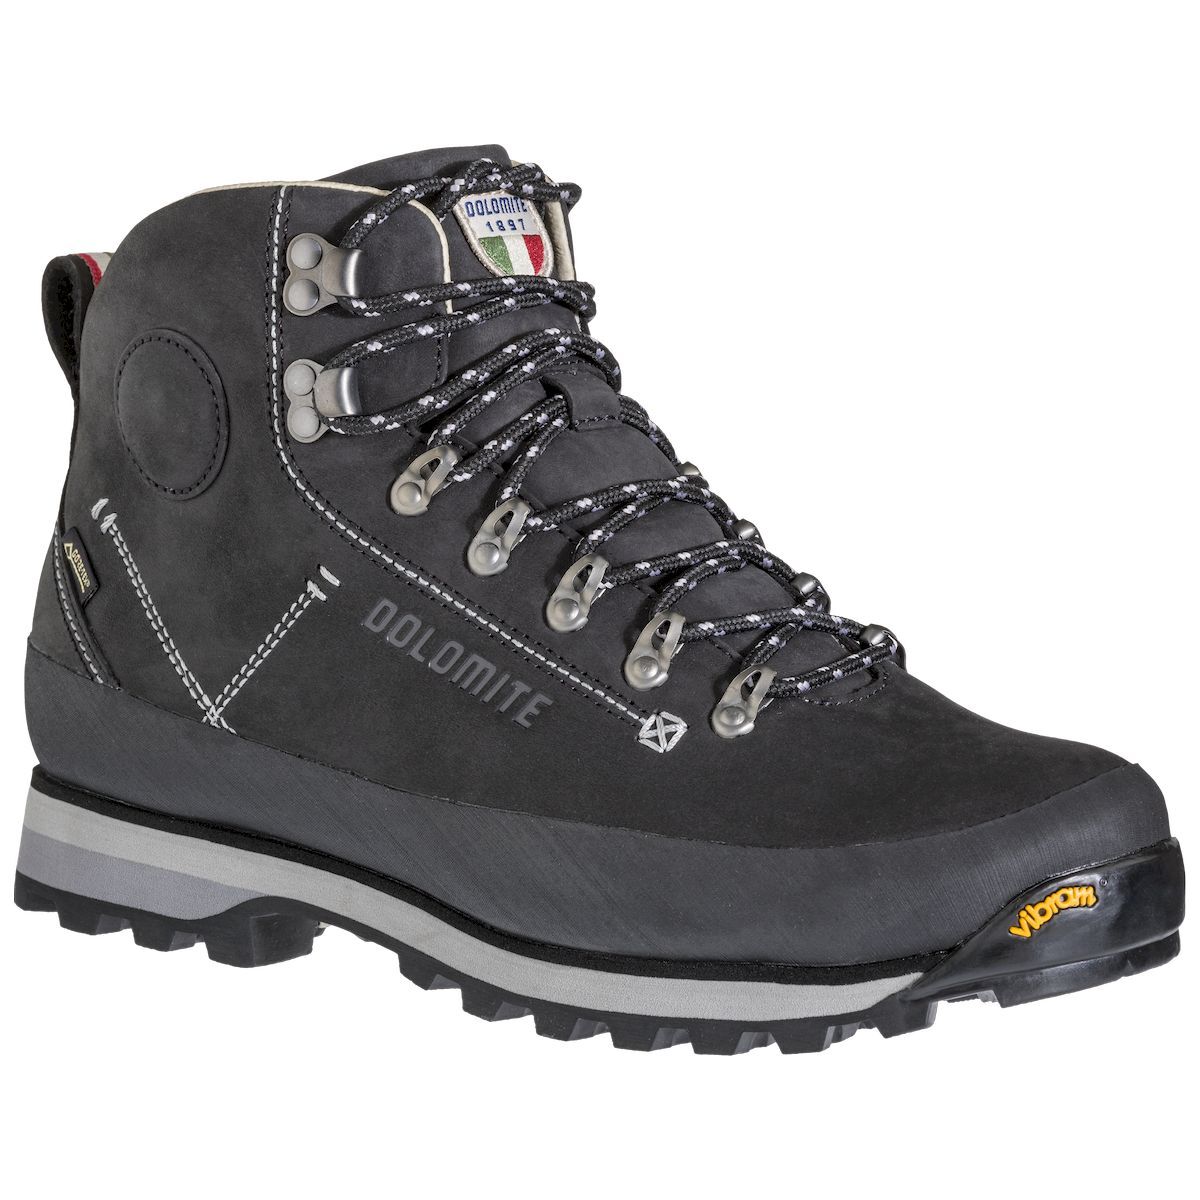 Dolomite 54 Trek GTX - Hiking boots - Men's